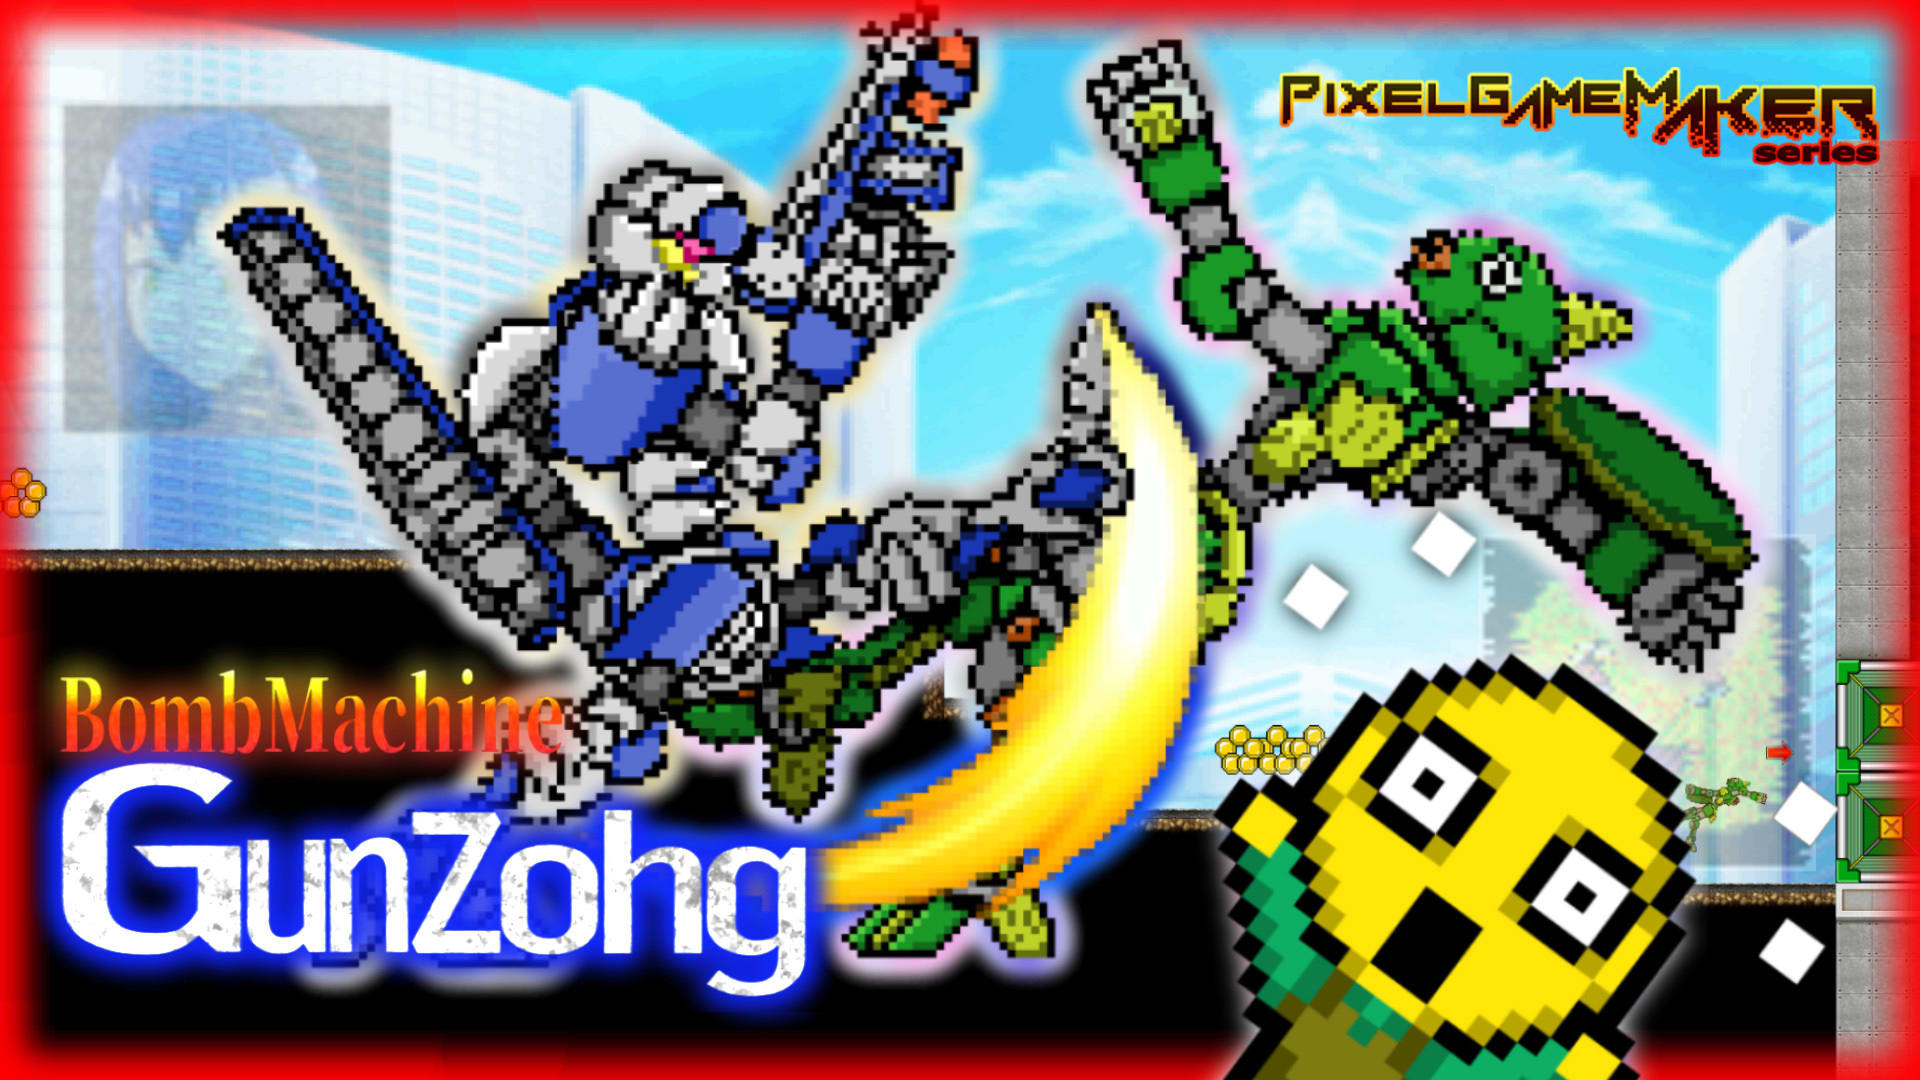 Pixel Game Maker Series BombMachine Gunzohg 1